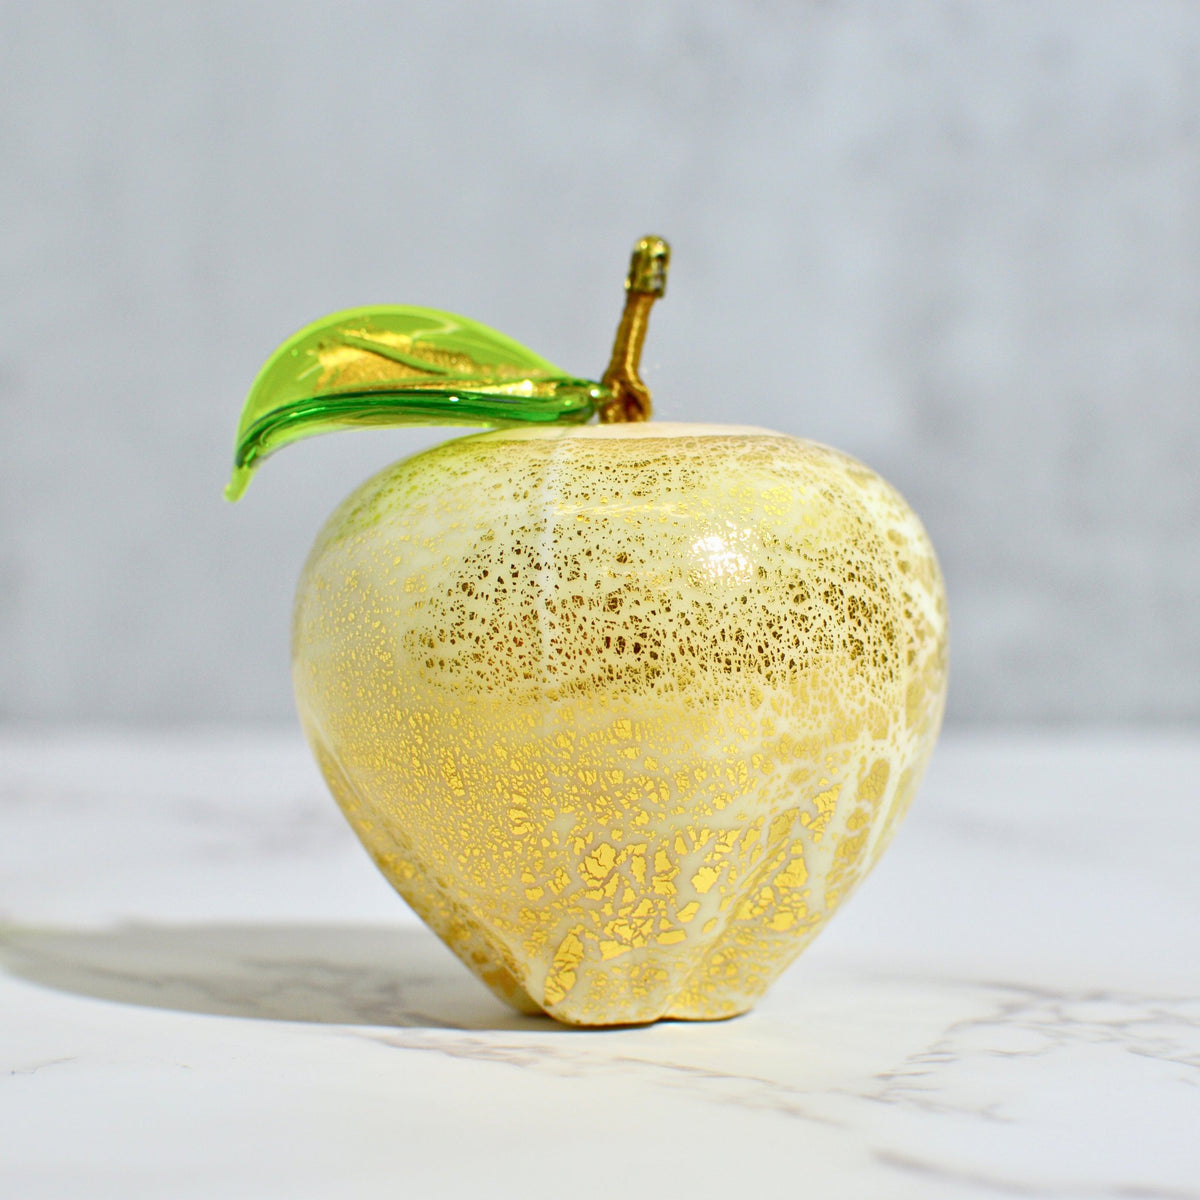 Murano Blown Glass Apple, 24k Gold Foil, Hand Blown in Italy - My Italian Decor